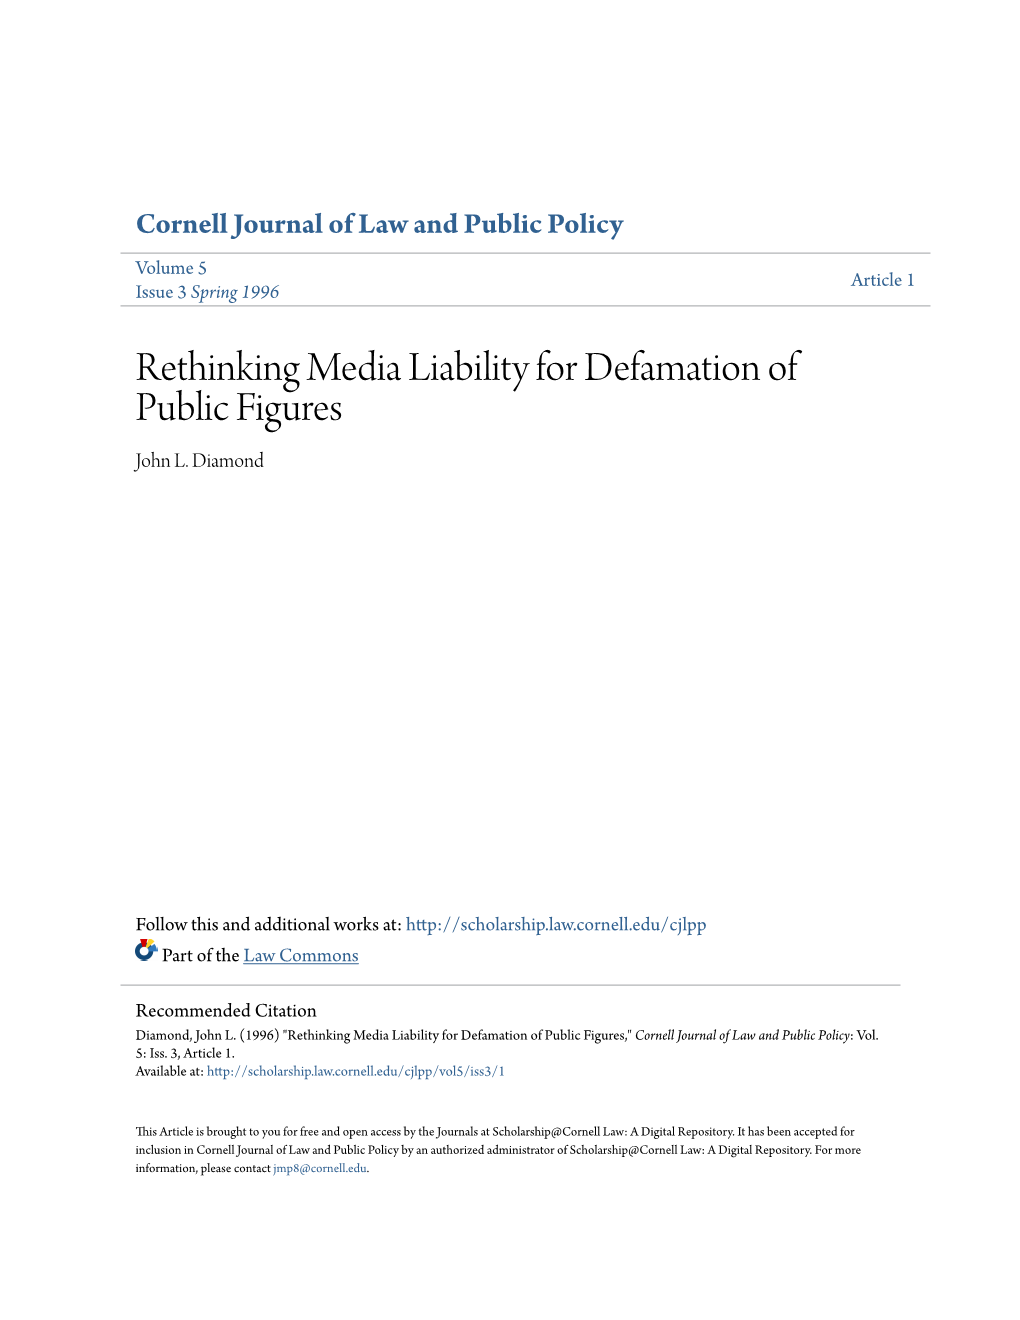 Rethinking Media Liability for Defamation of Public Figures John L